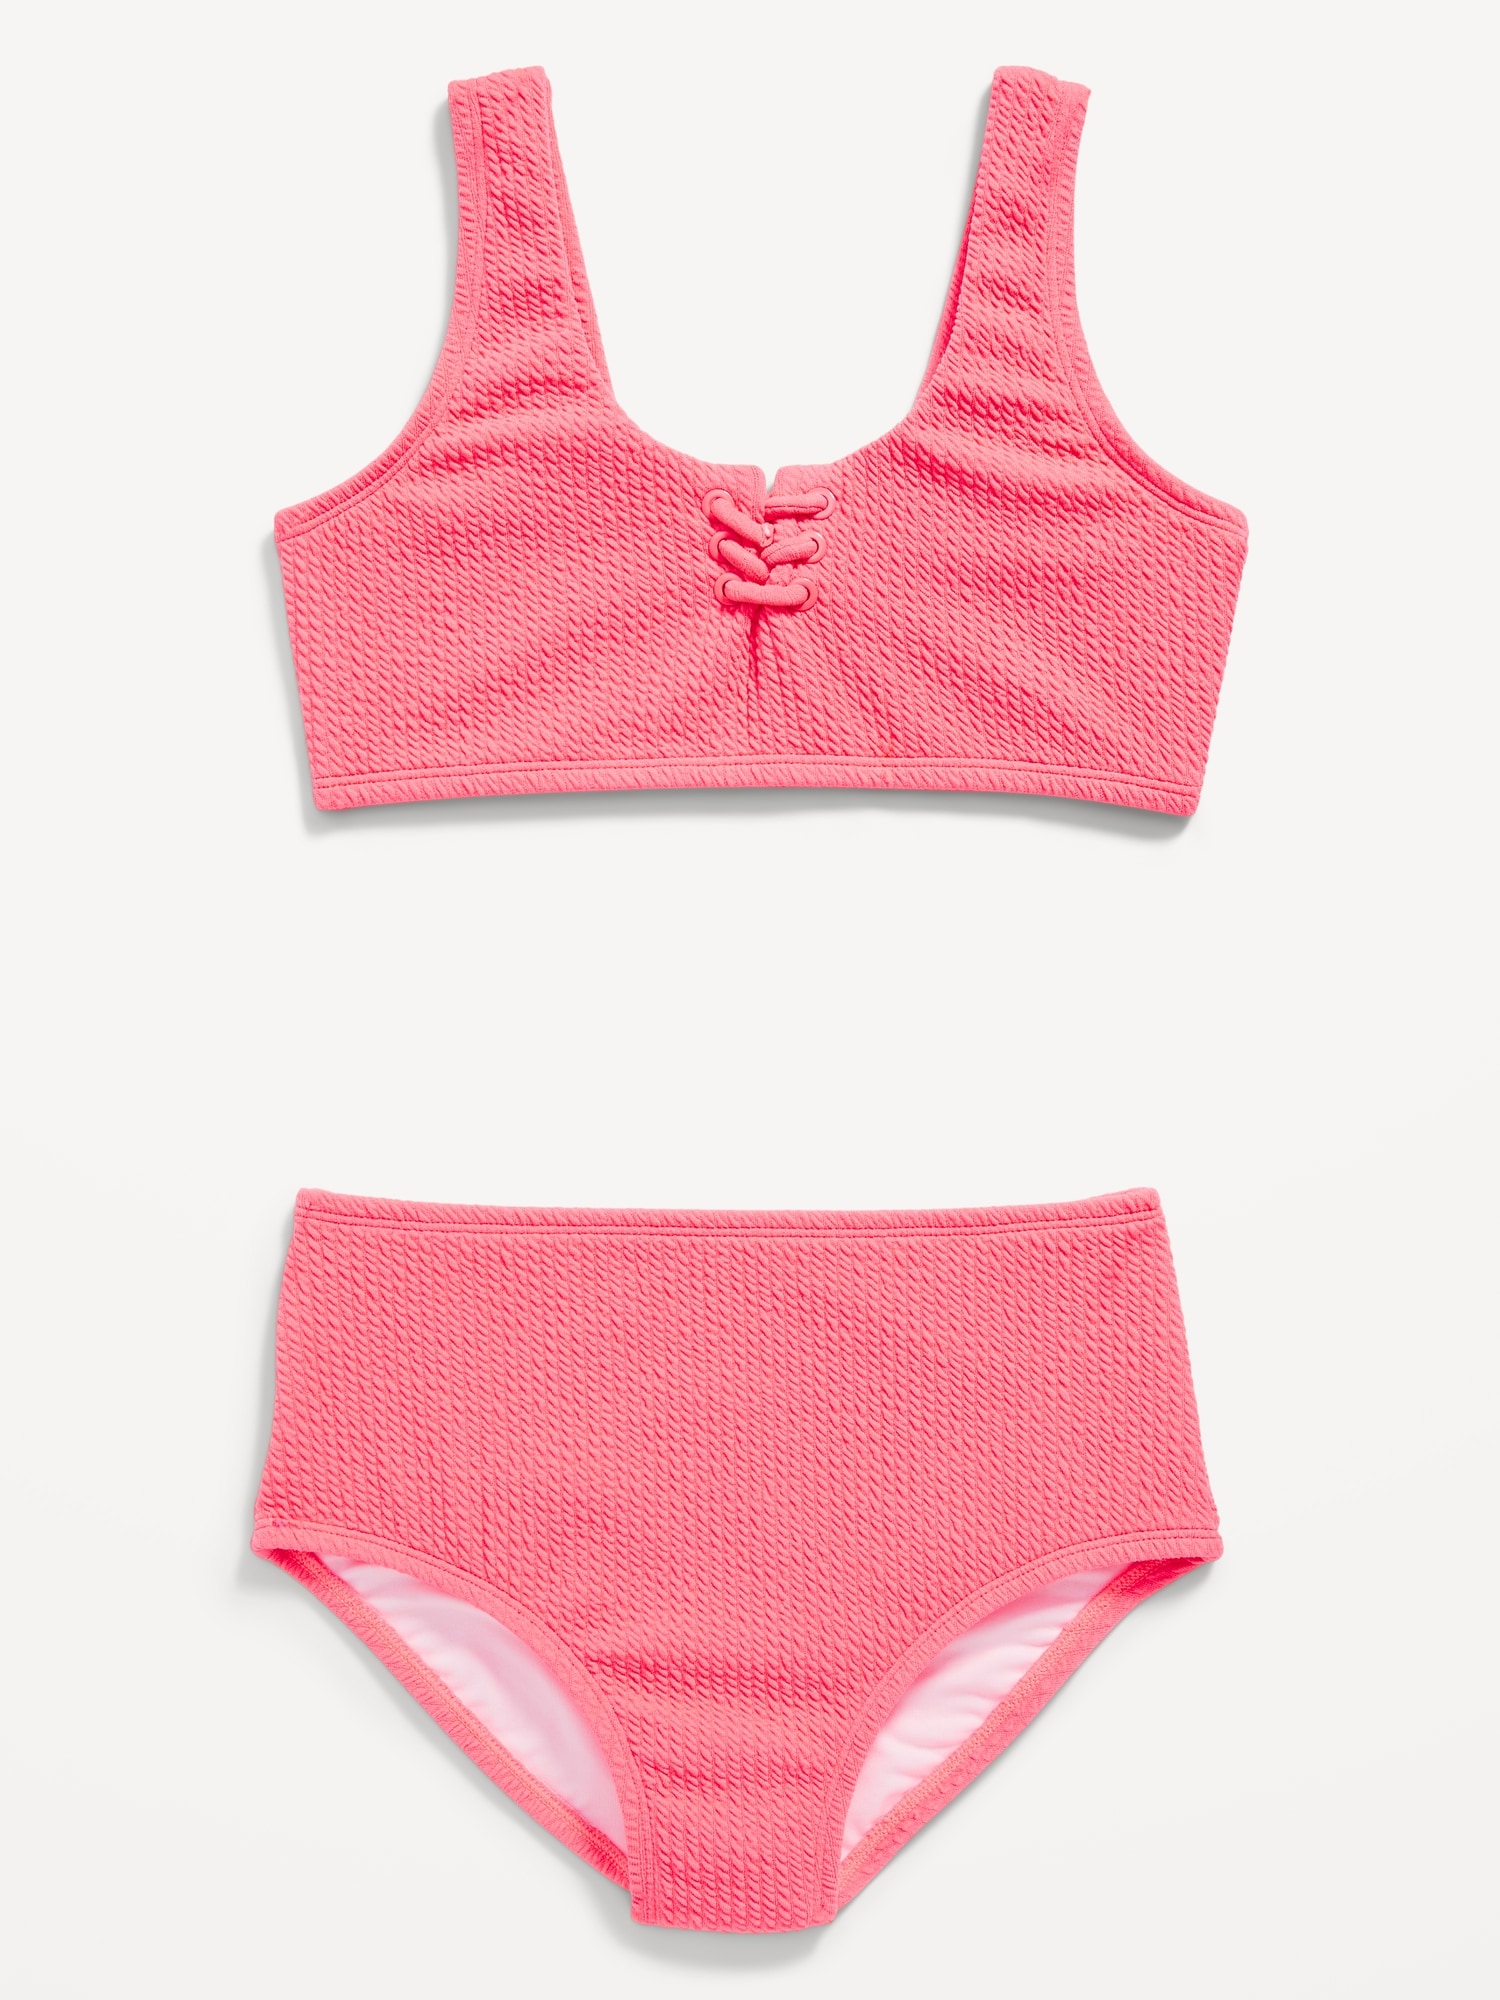 Lace-Up Front Bikini Swim Set for Girls Hot Deal